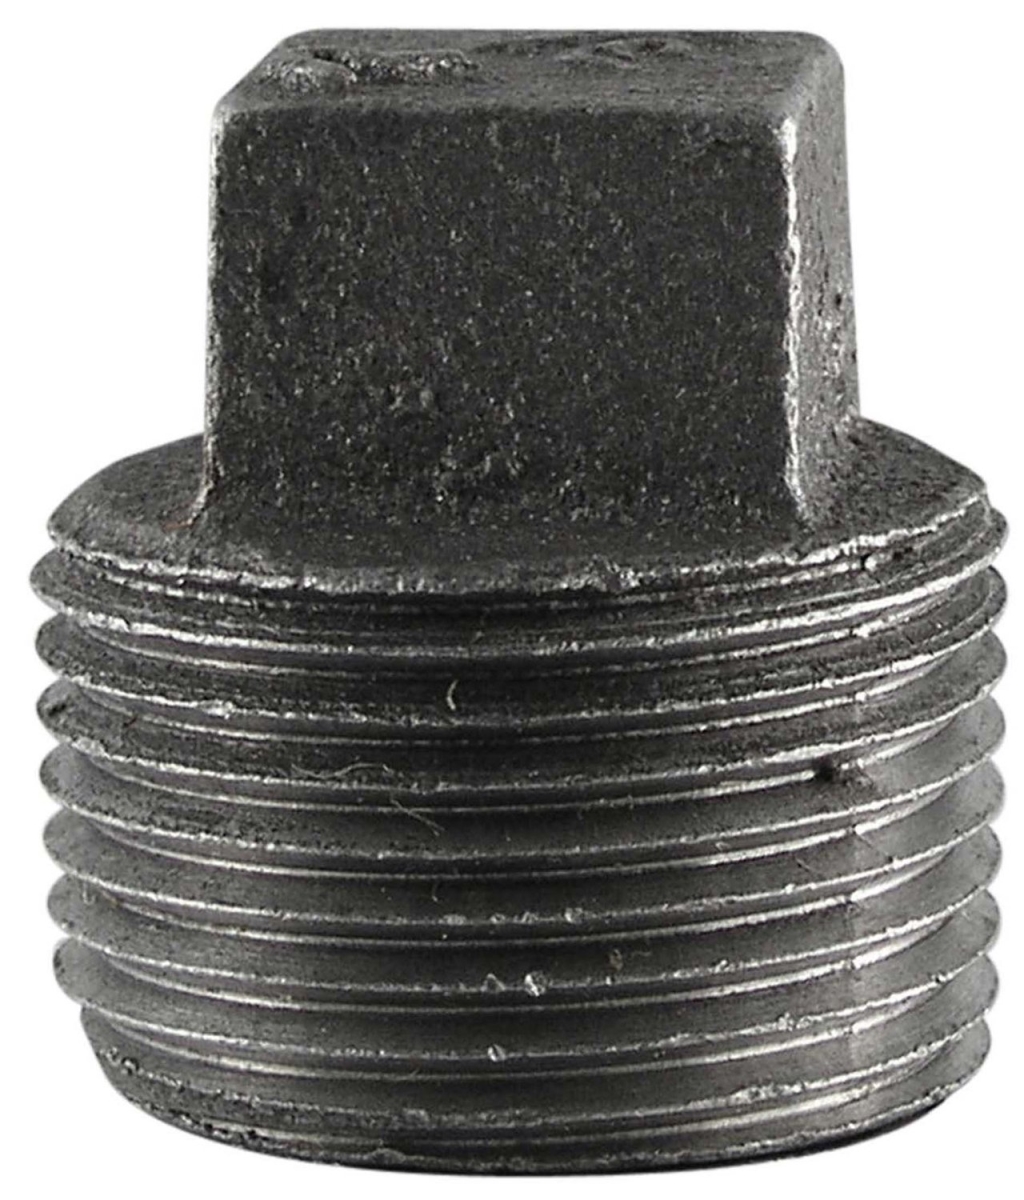 521-803hn 0.5 In. Black Square Head Plugs